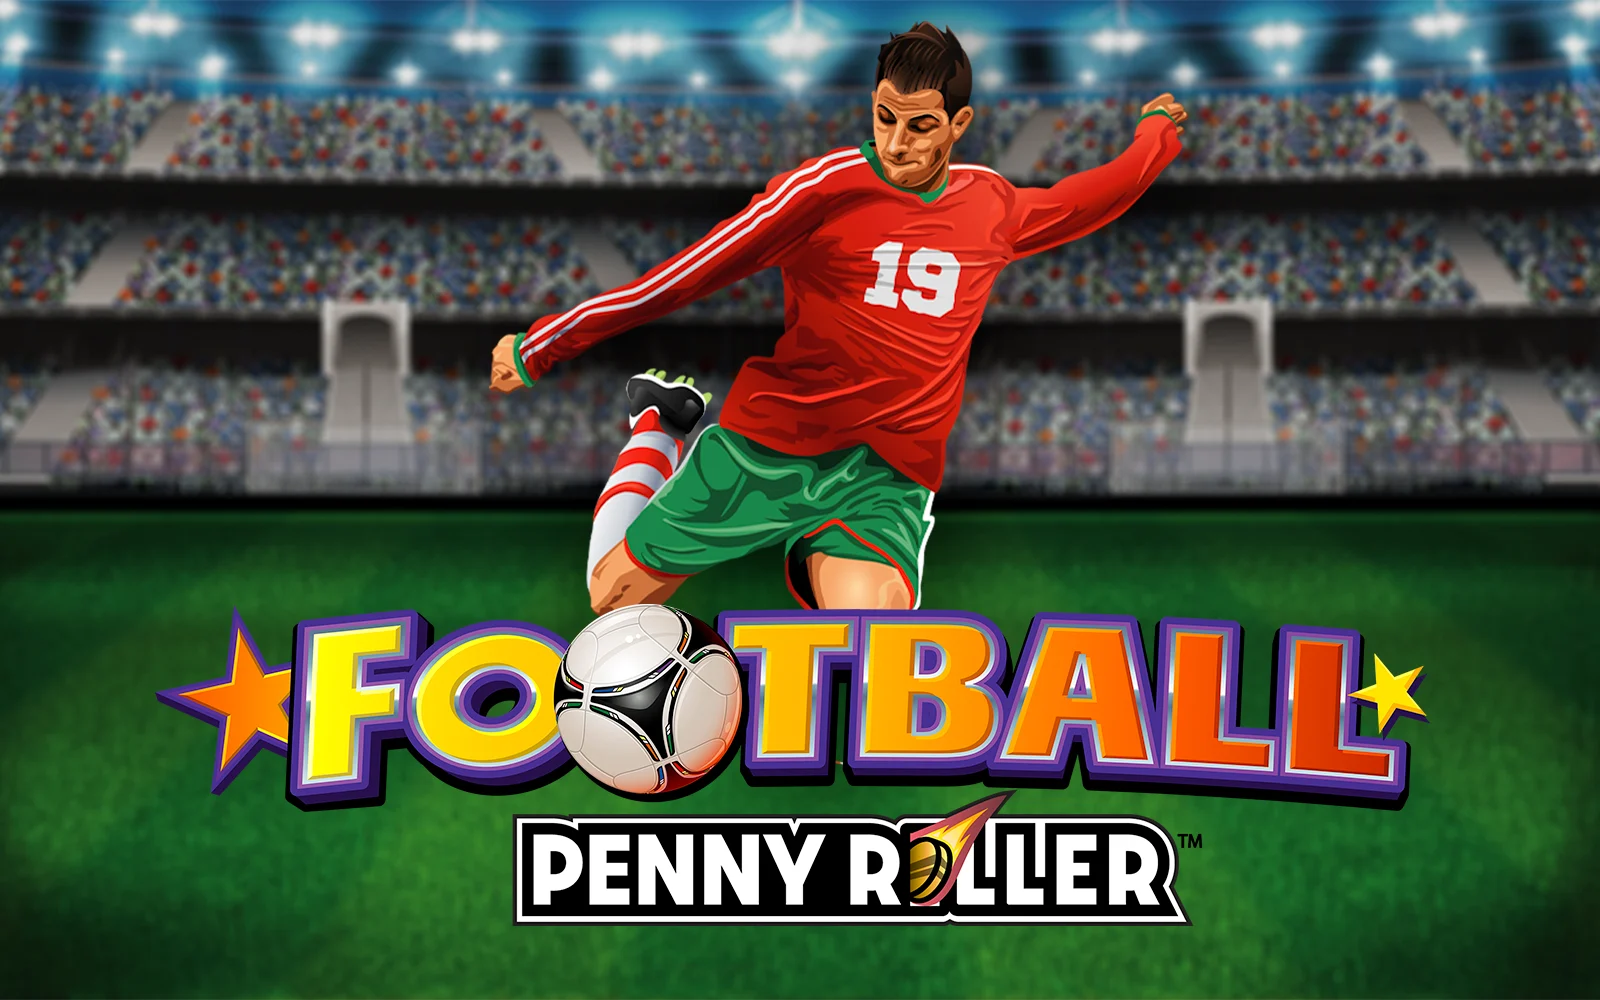 Joacă Football Penny Roller™ în cazinoul online Starcasino.be